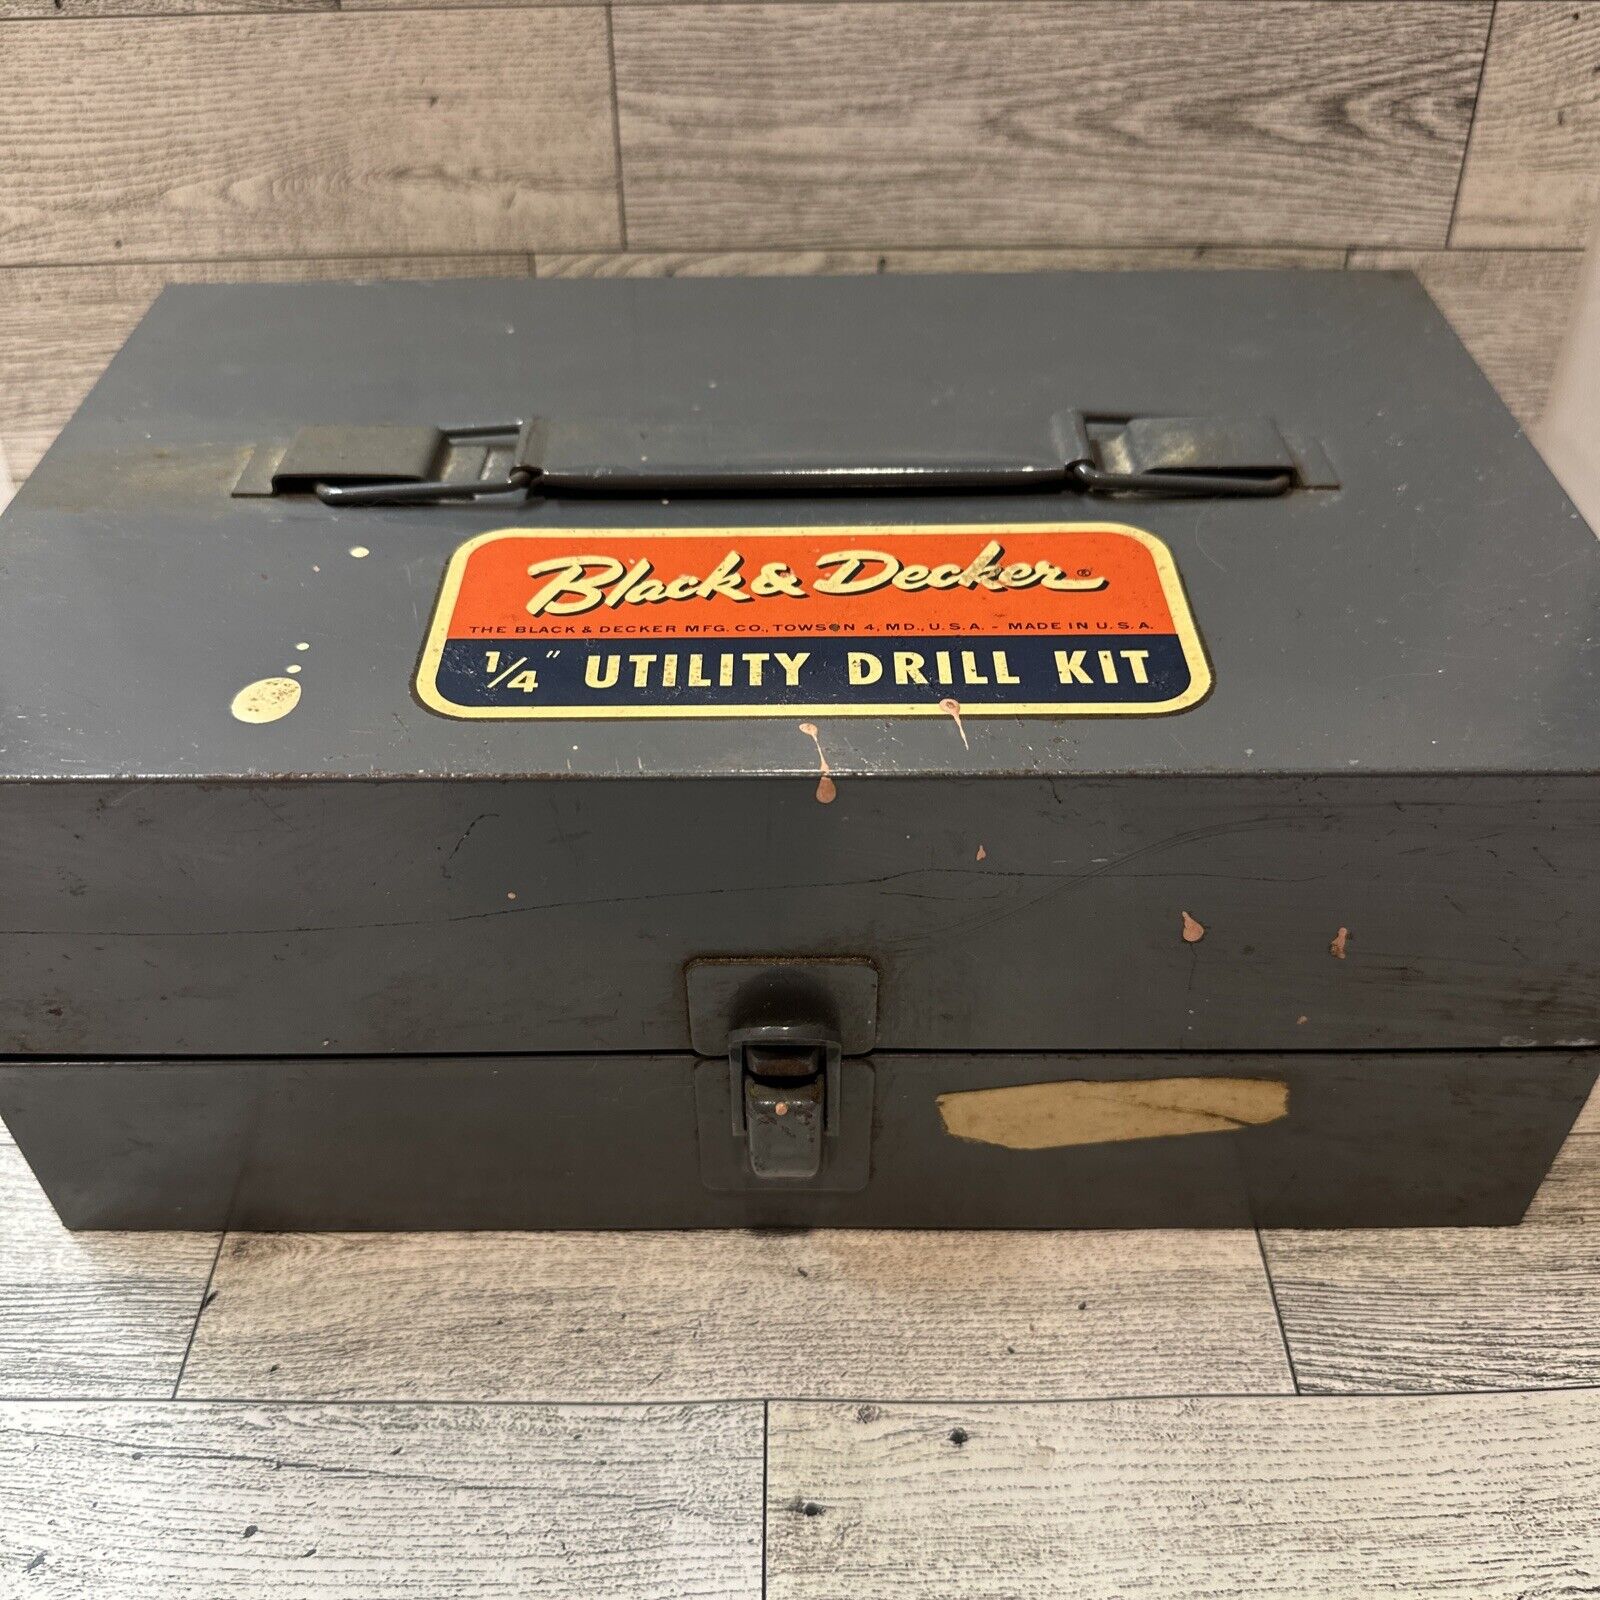 BLACK & DECKER Metal Case Tool Box for 1/4” Utility Drill Kit 11x7x5” Vintage